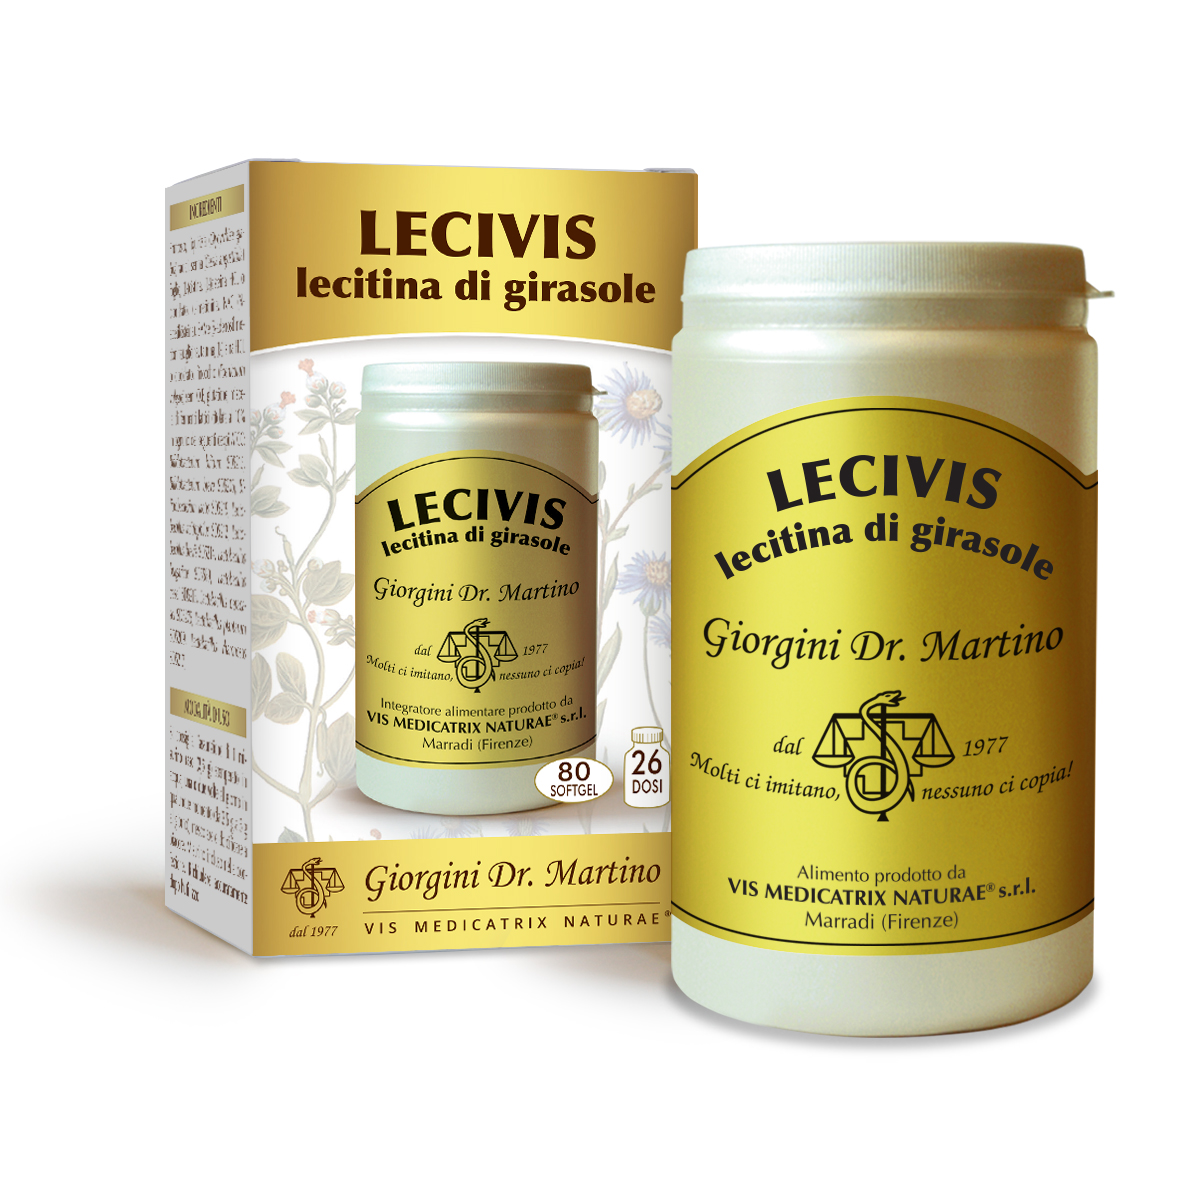 LECIVIS 100 g - 80 softgel da1250 mg